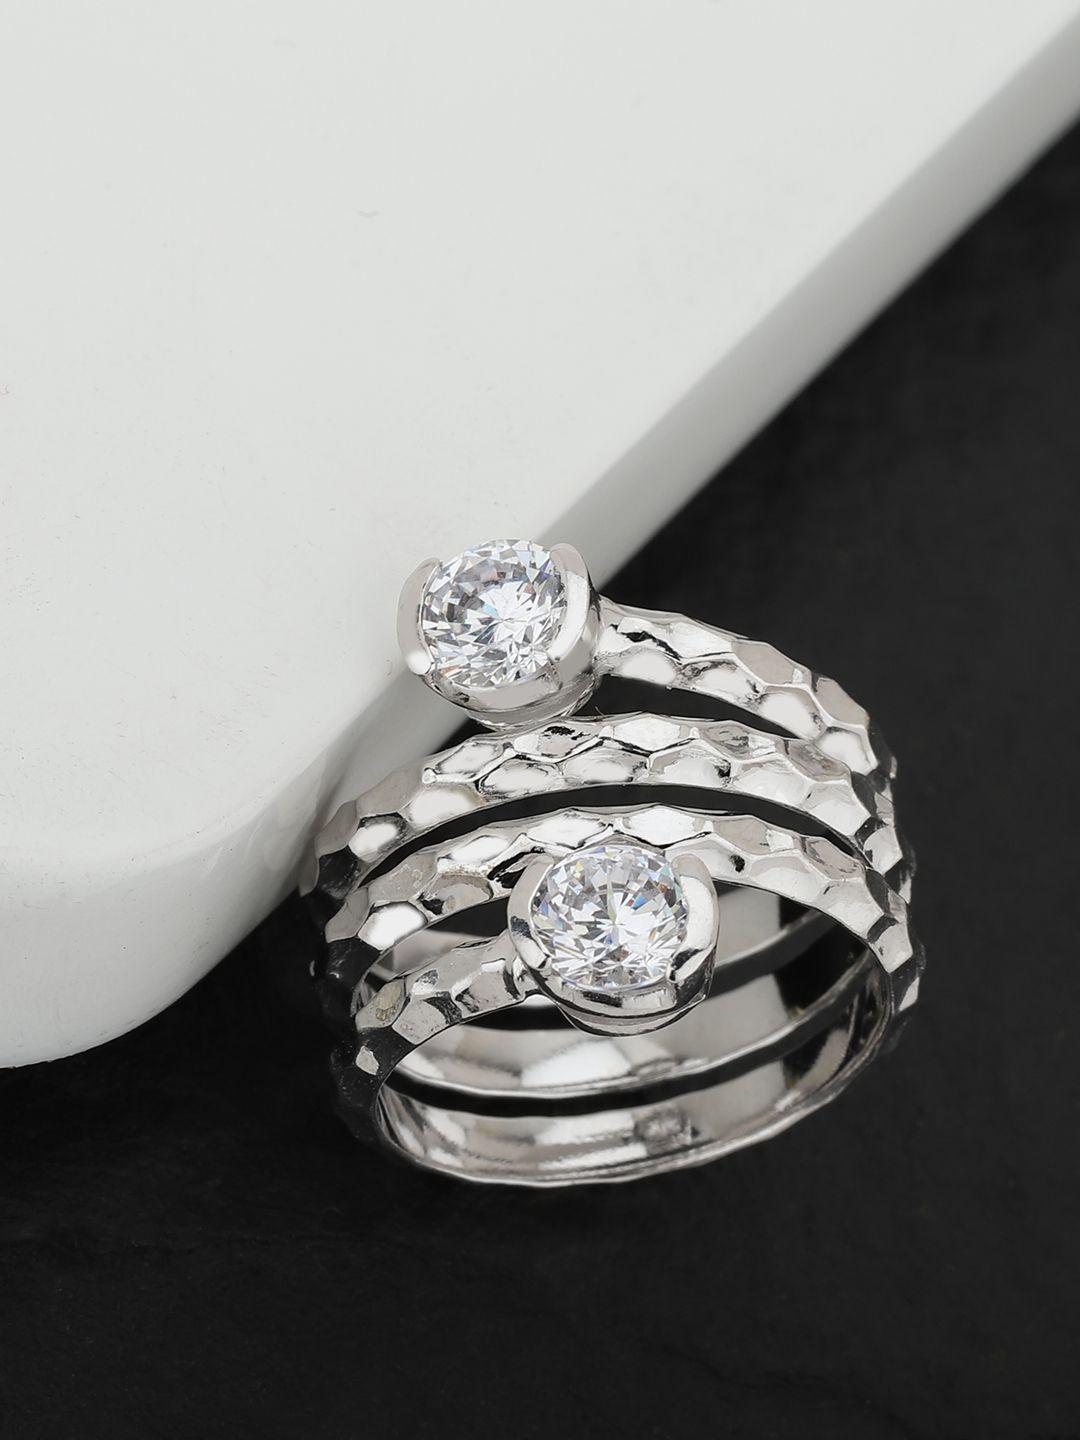 carlton london women silver-toned rhodium-plated cz-studded adjustable finger ring